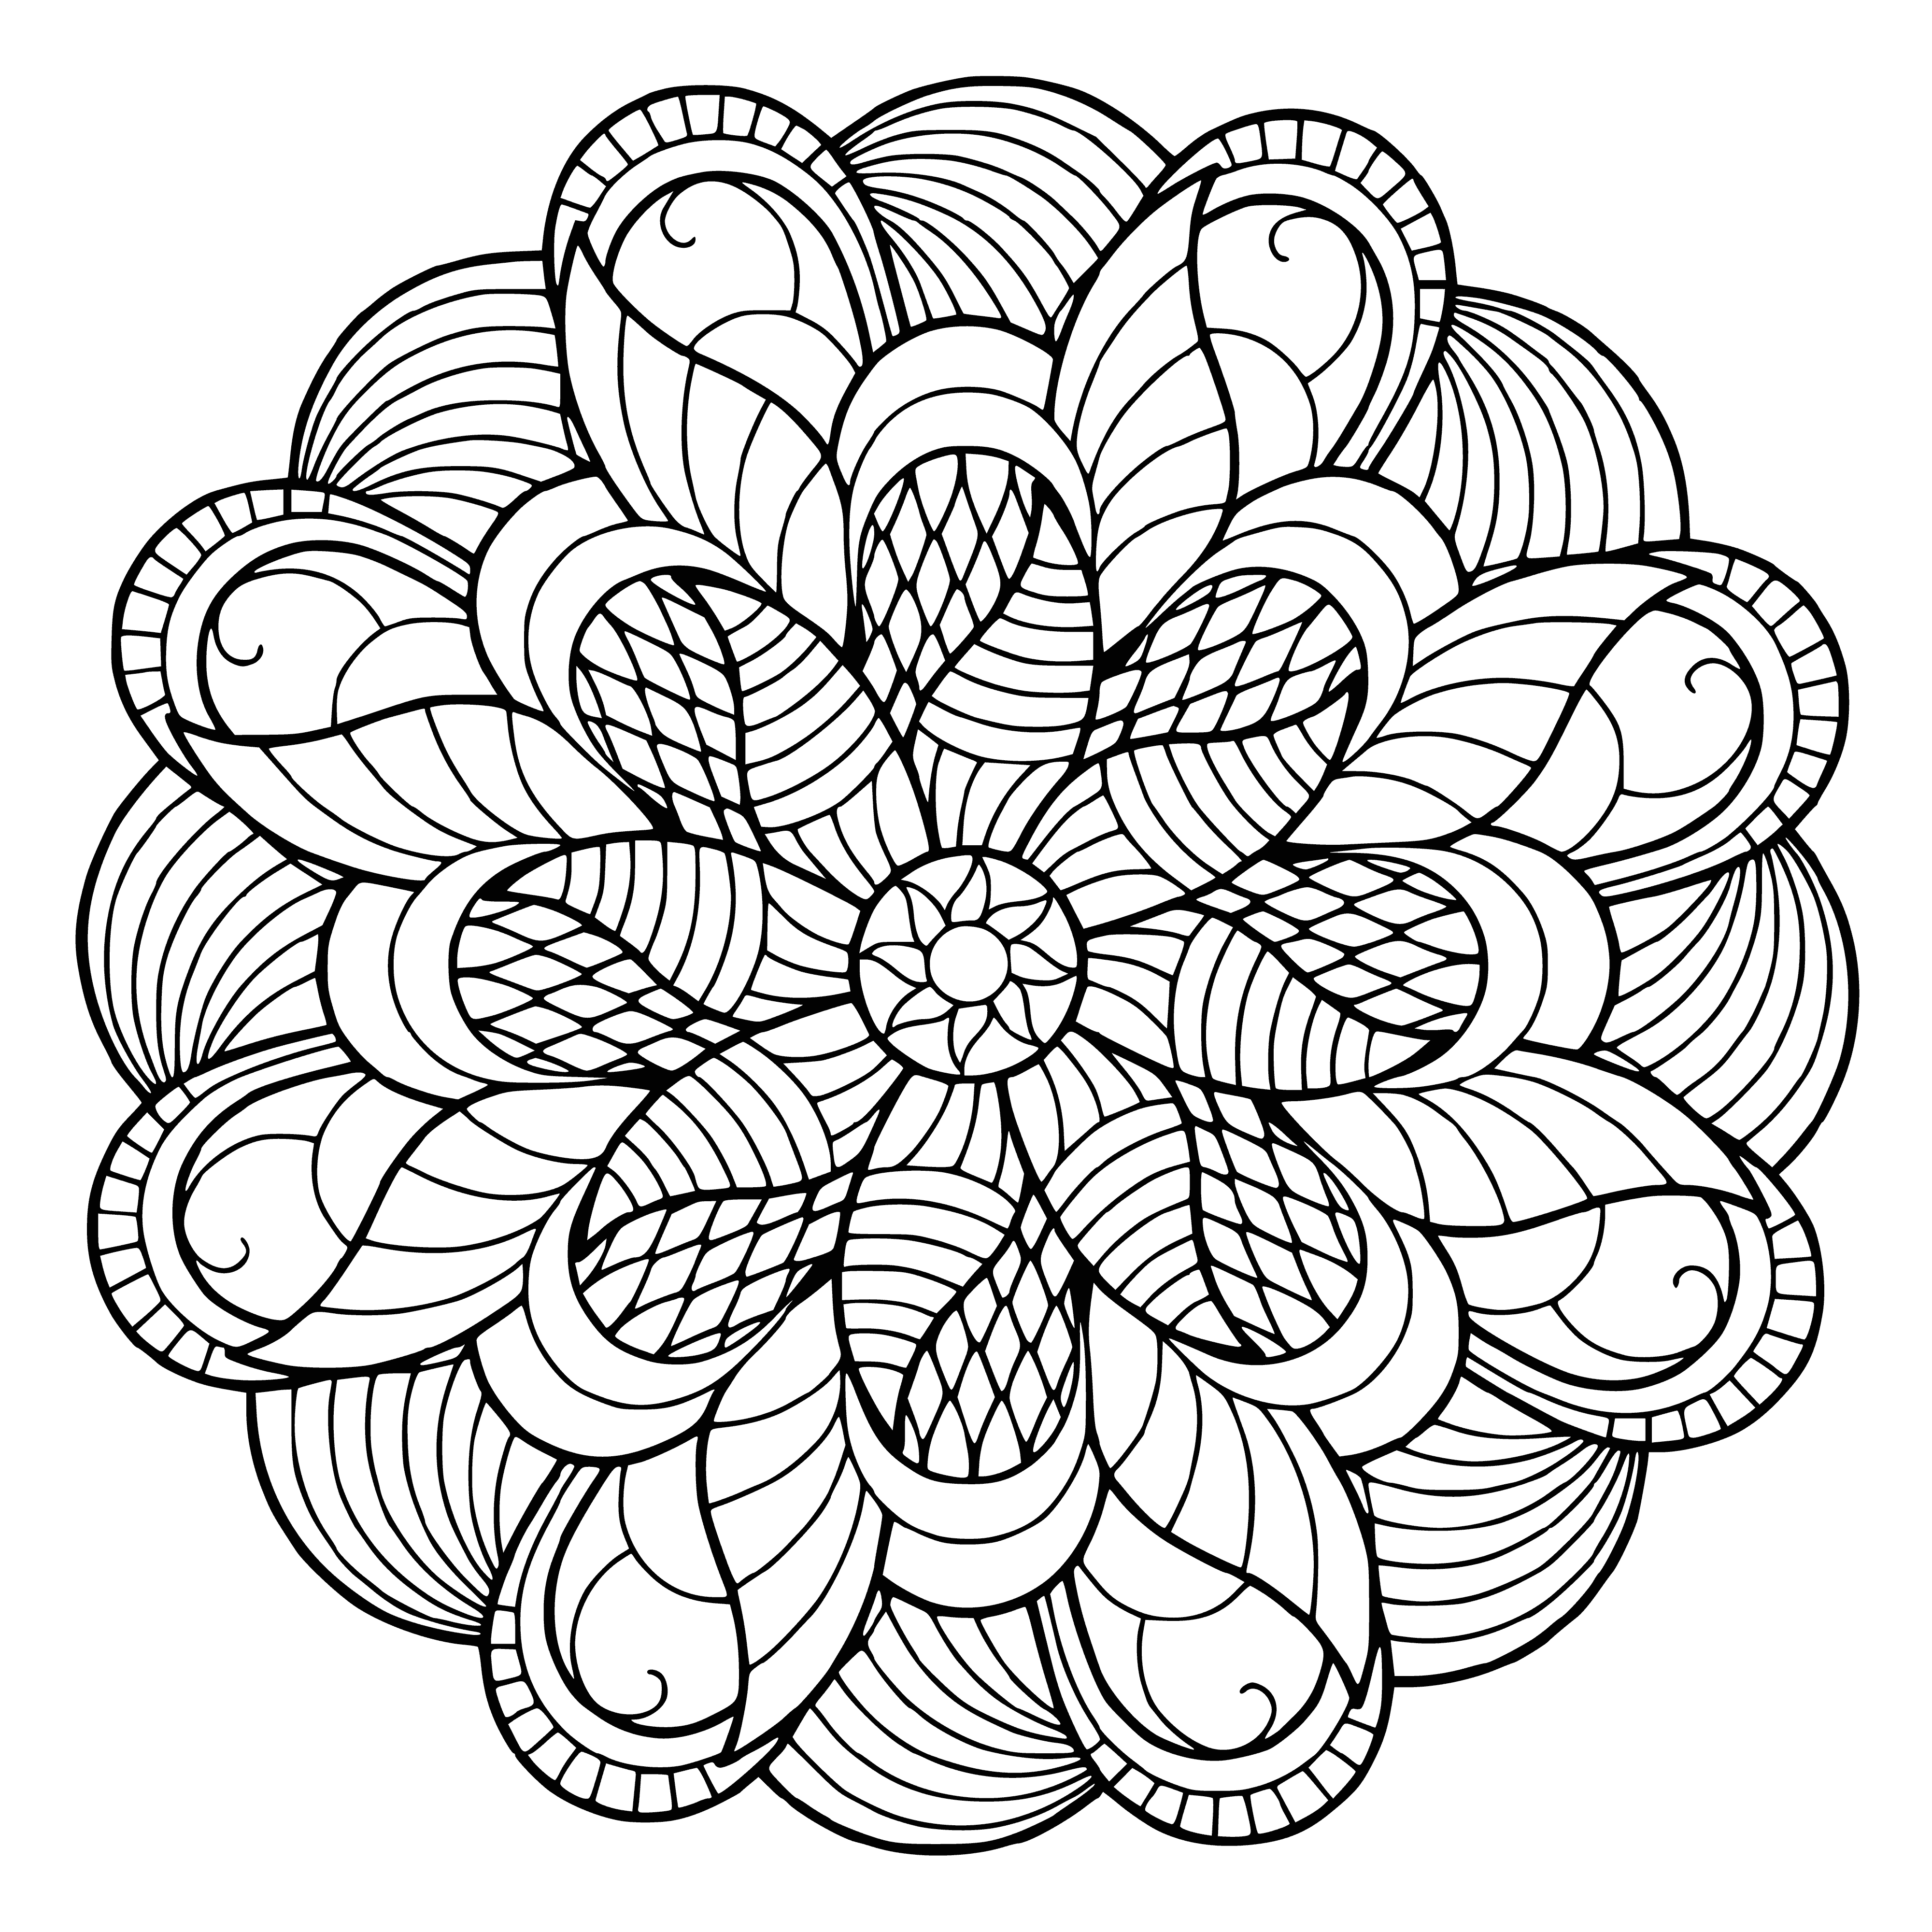 Flower mandala coloring page